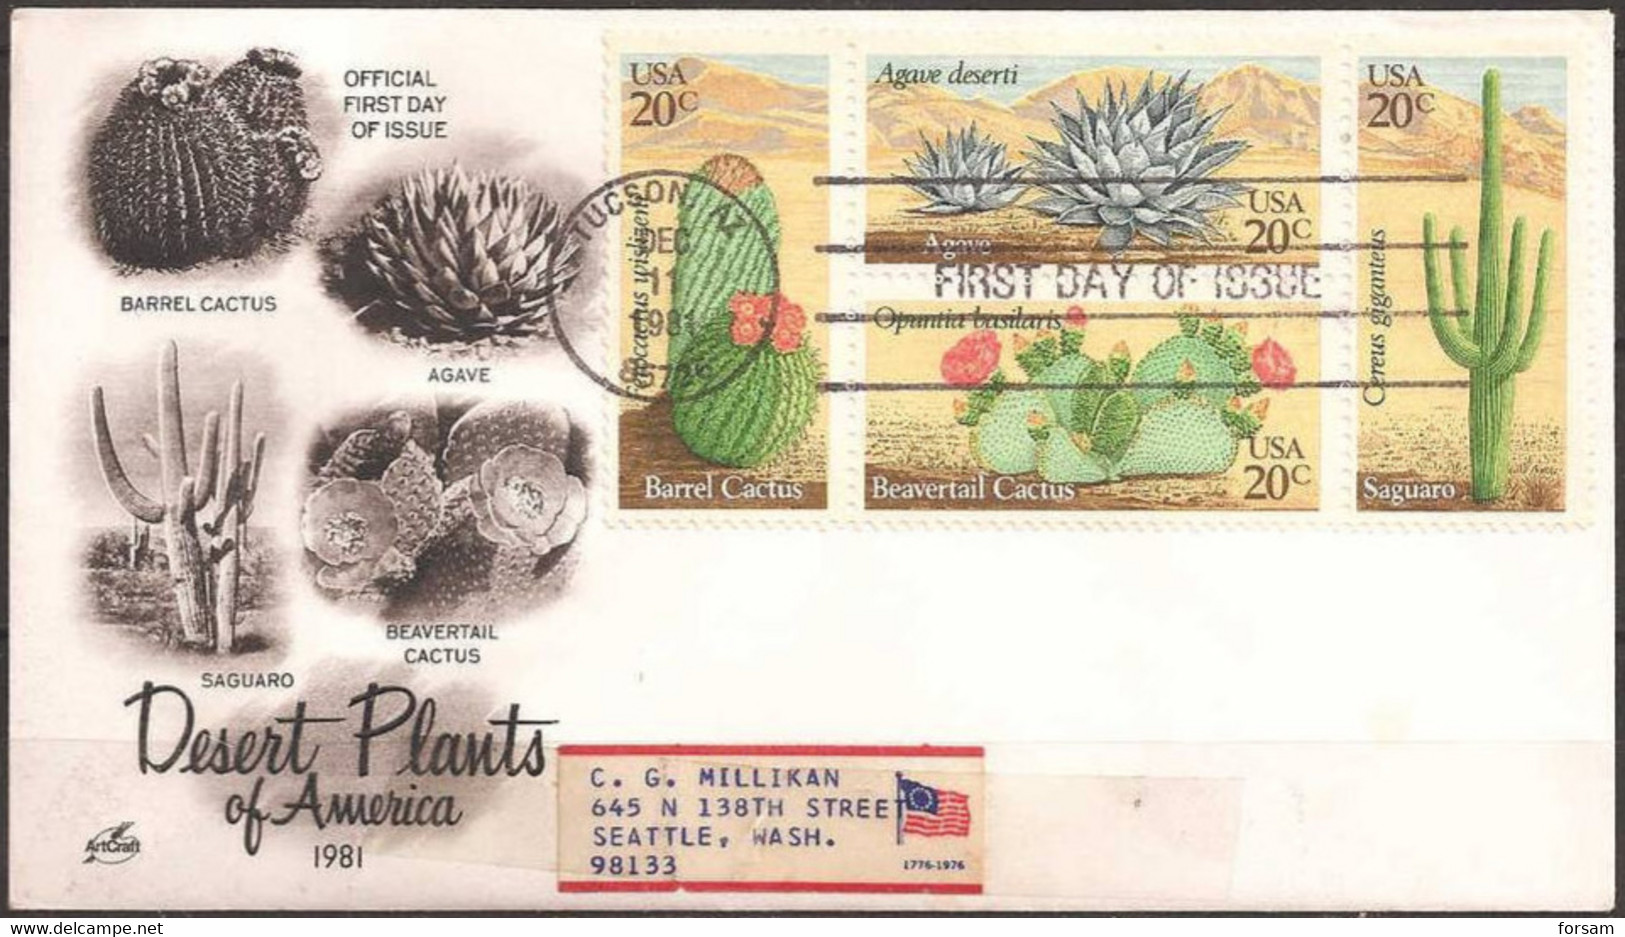 USA..1981..DECERT PLANTS Of  AMERICA ...FDC. - Cactusses